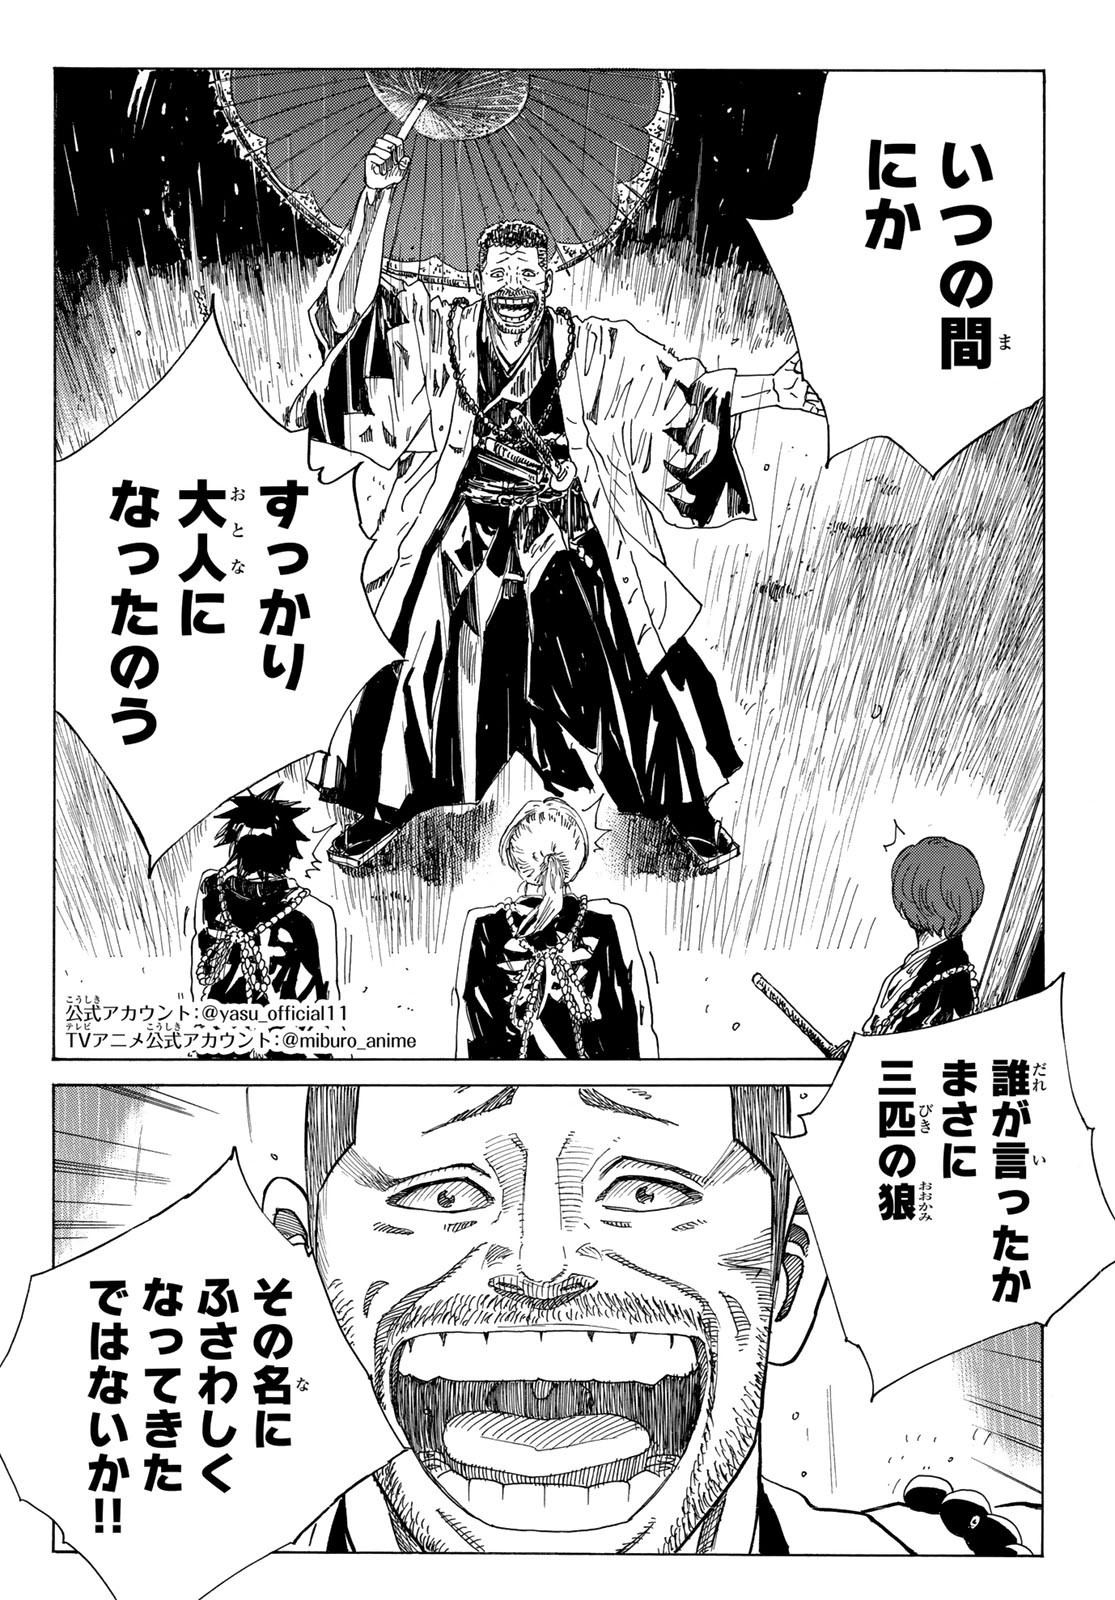 Ao no Miburo - Chapter 099 - Page 2